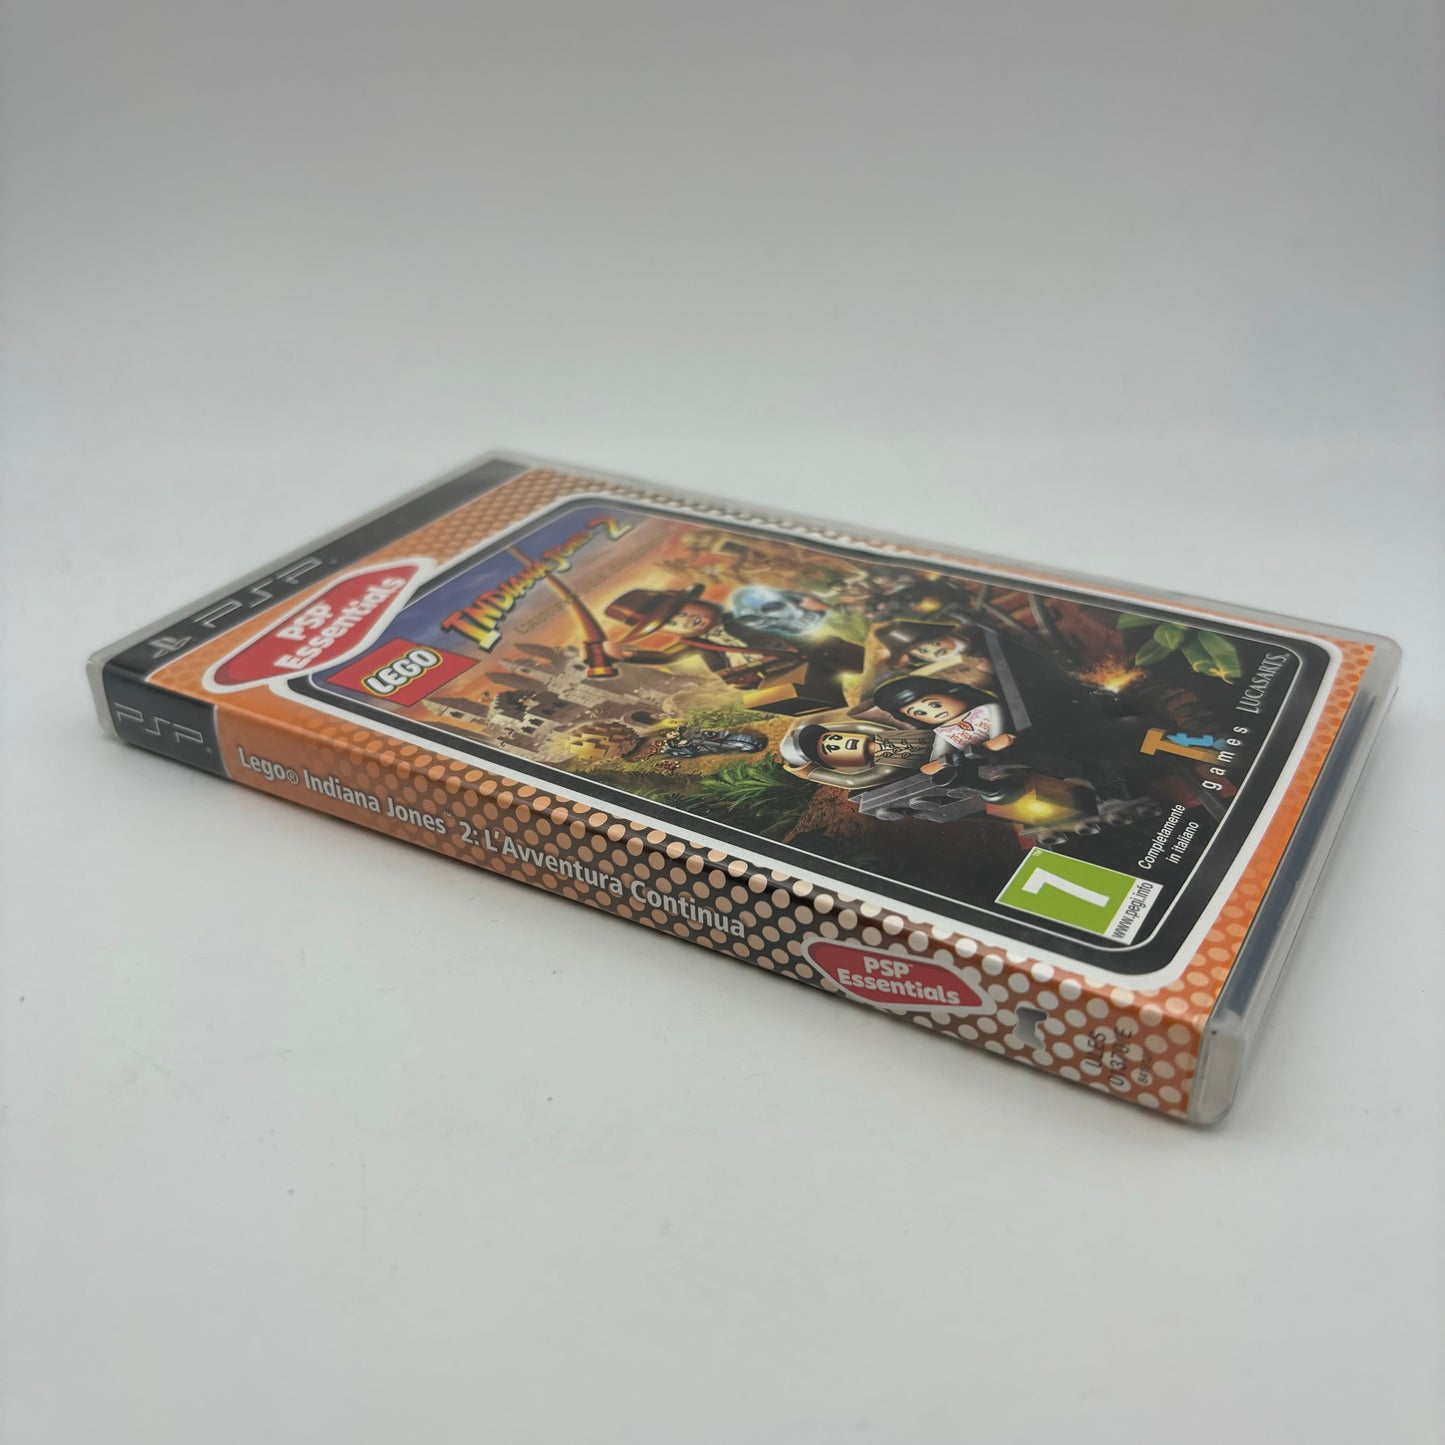 Lego Indiana Jones 2 PSP PAL ITA (USATO)